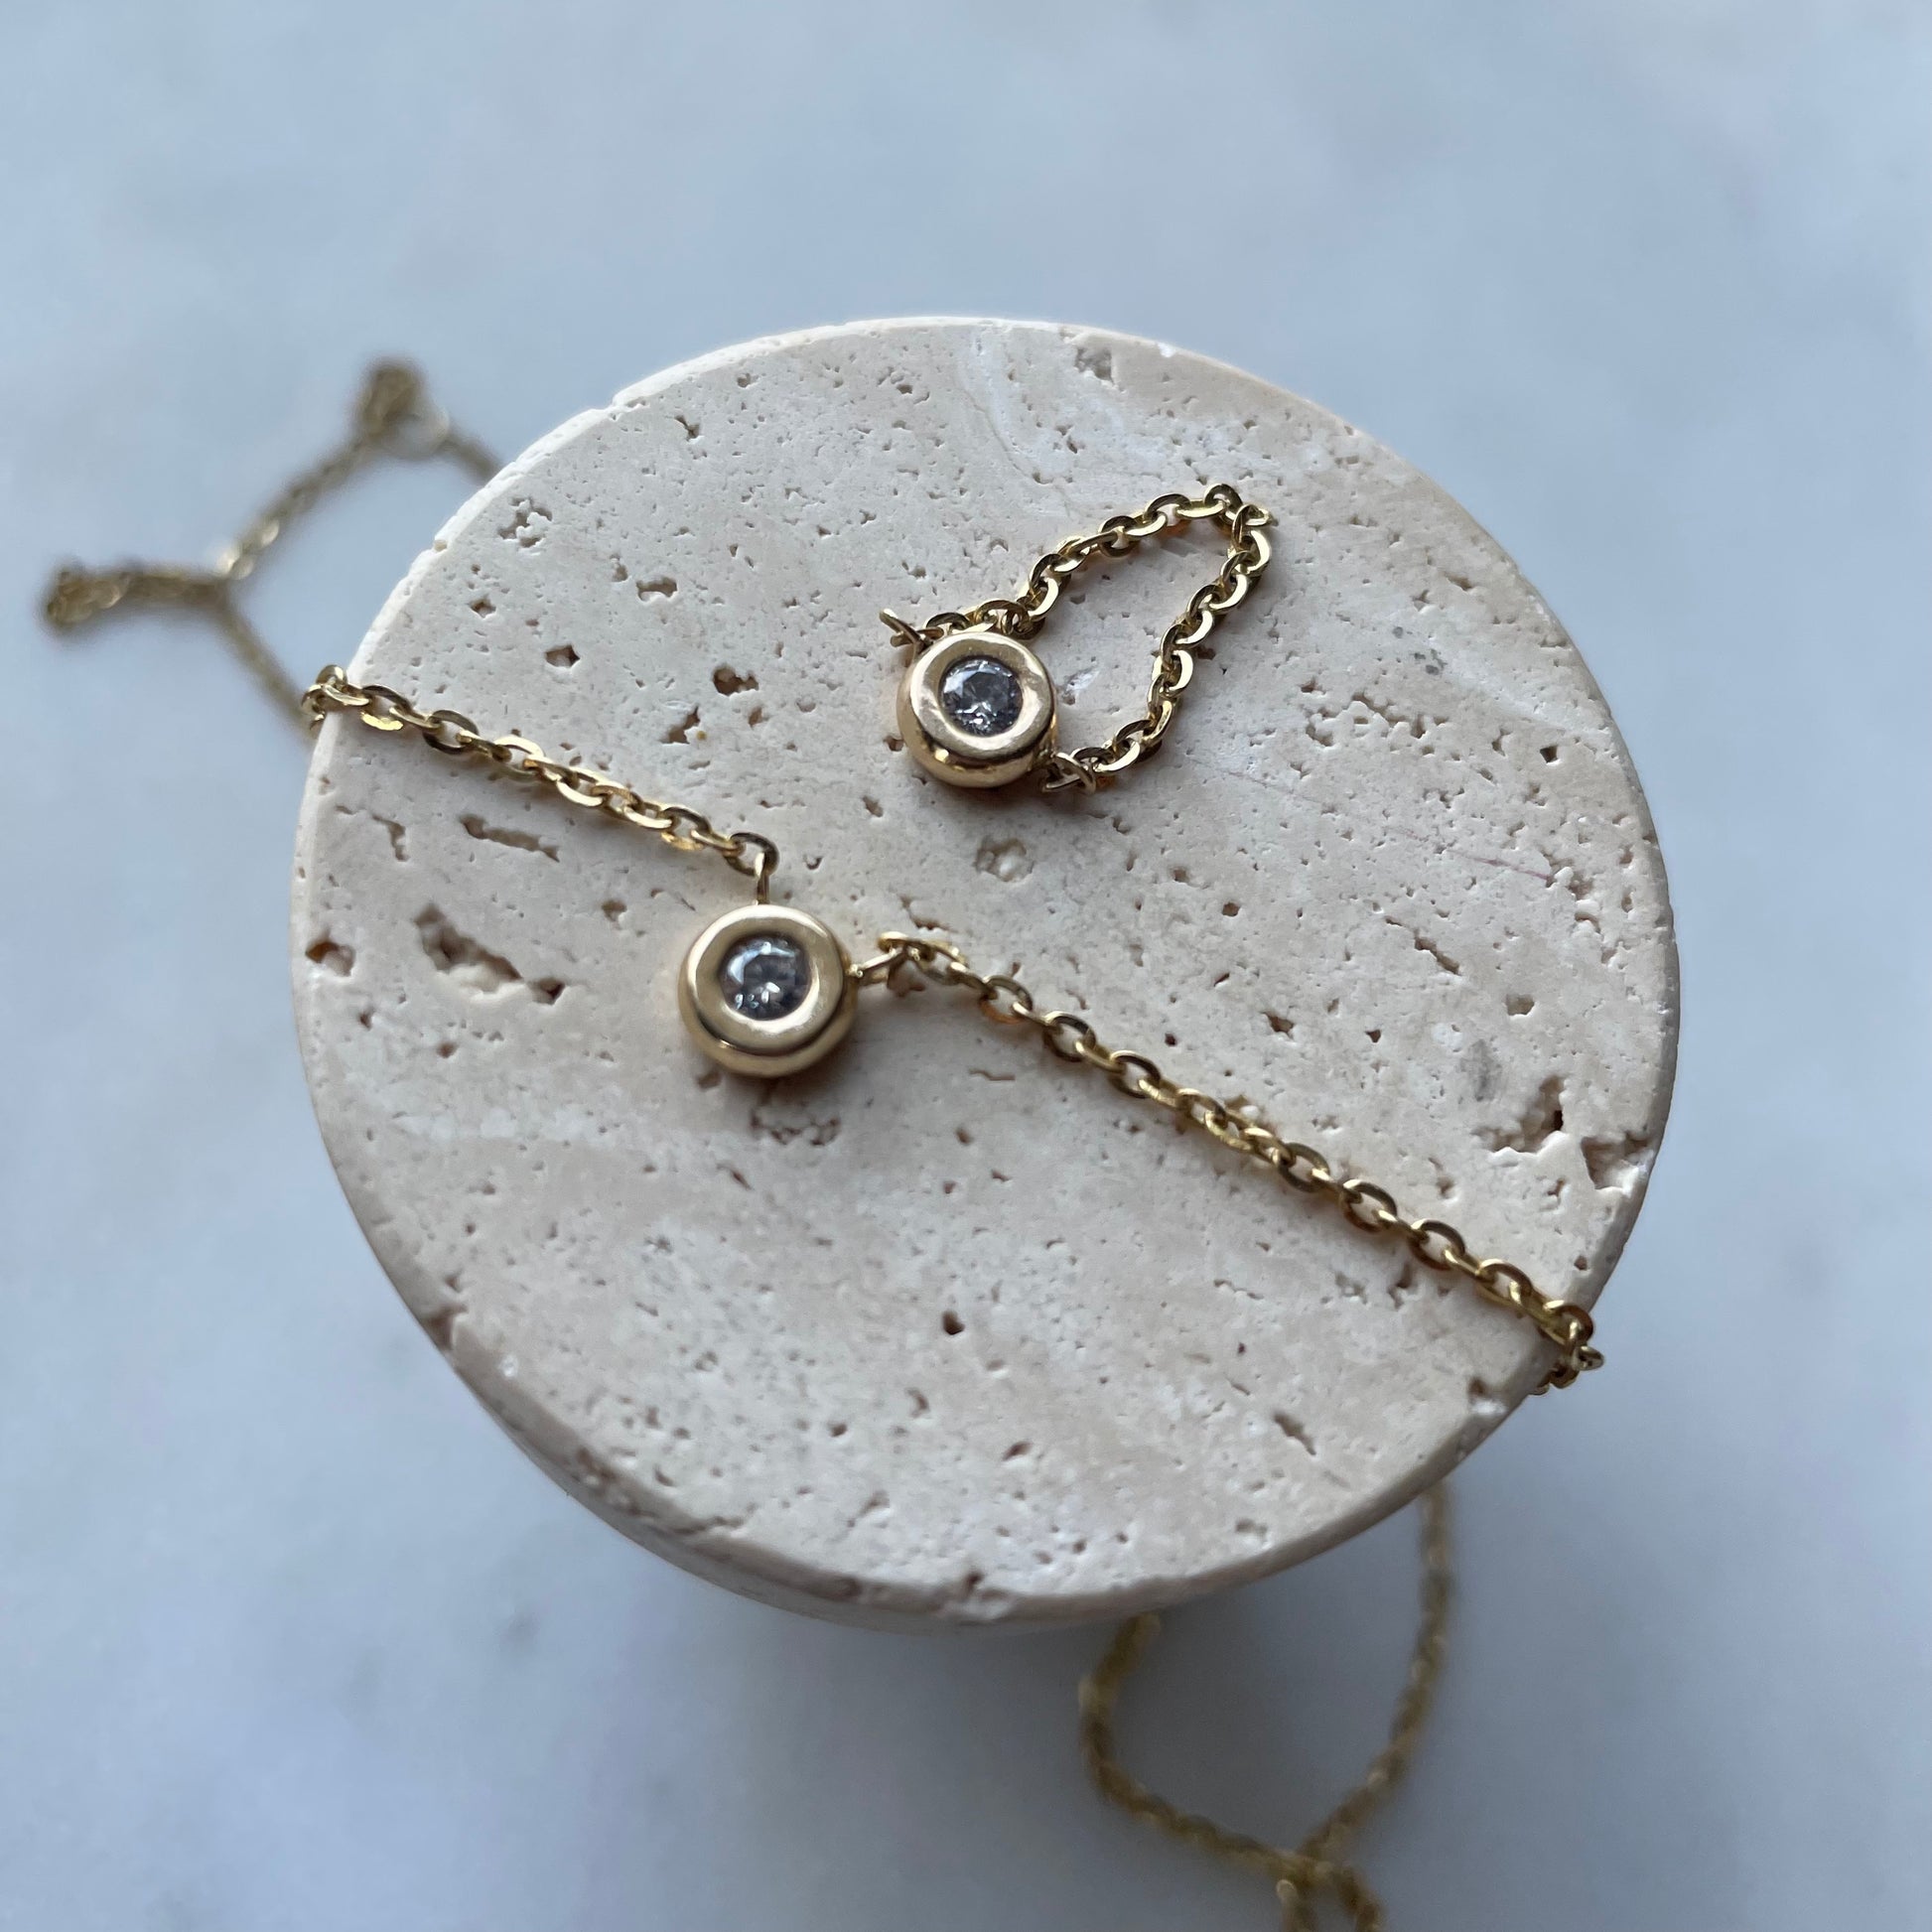 Bubble bezel Diamond Necklace - - Jewelry - Goldie Paris Jewelry - Bezel Necklace